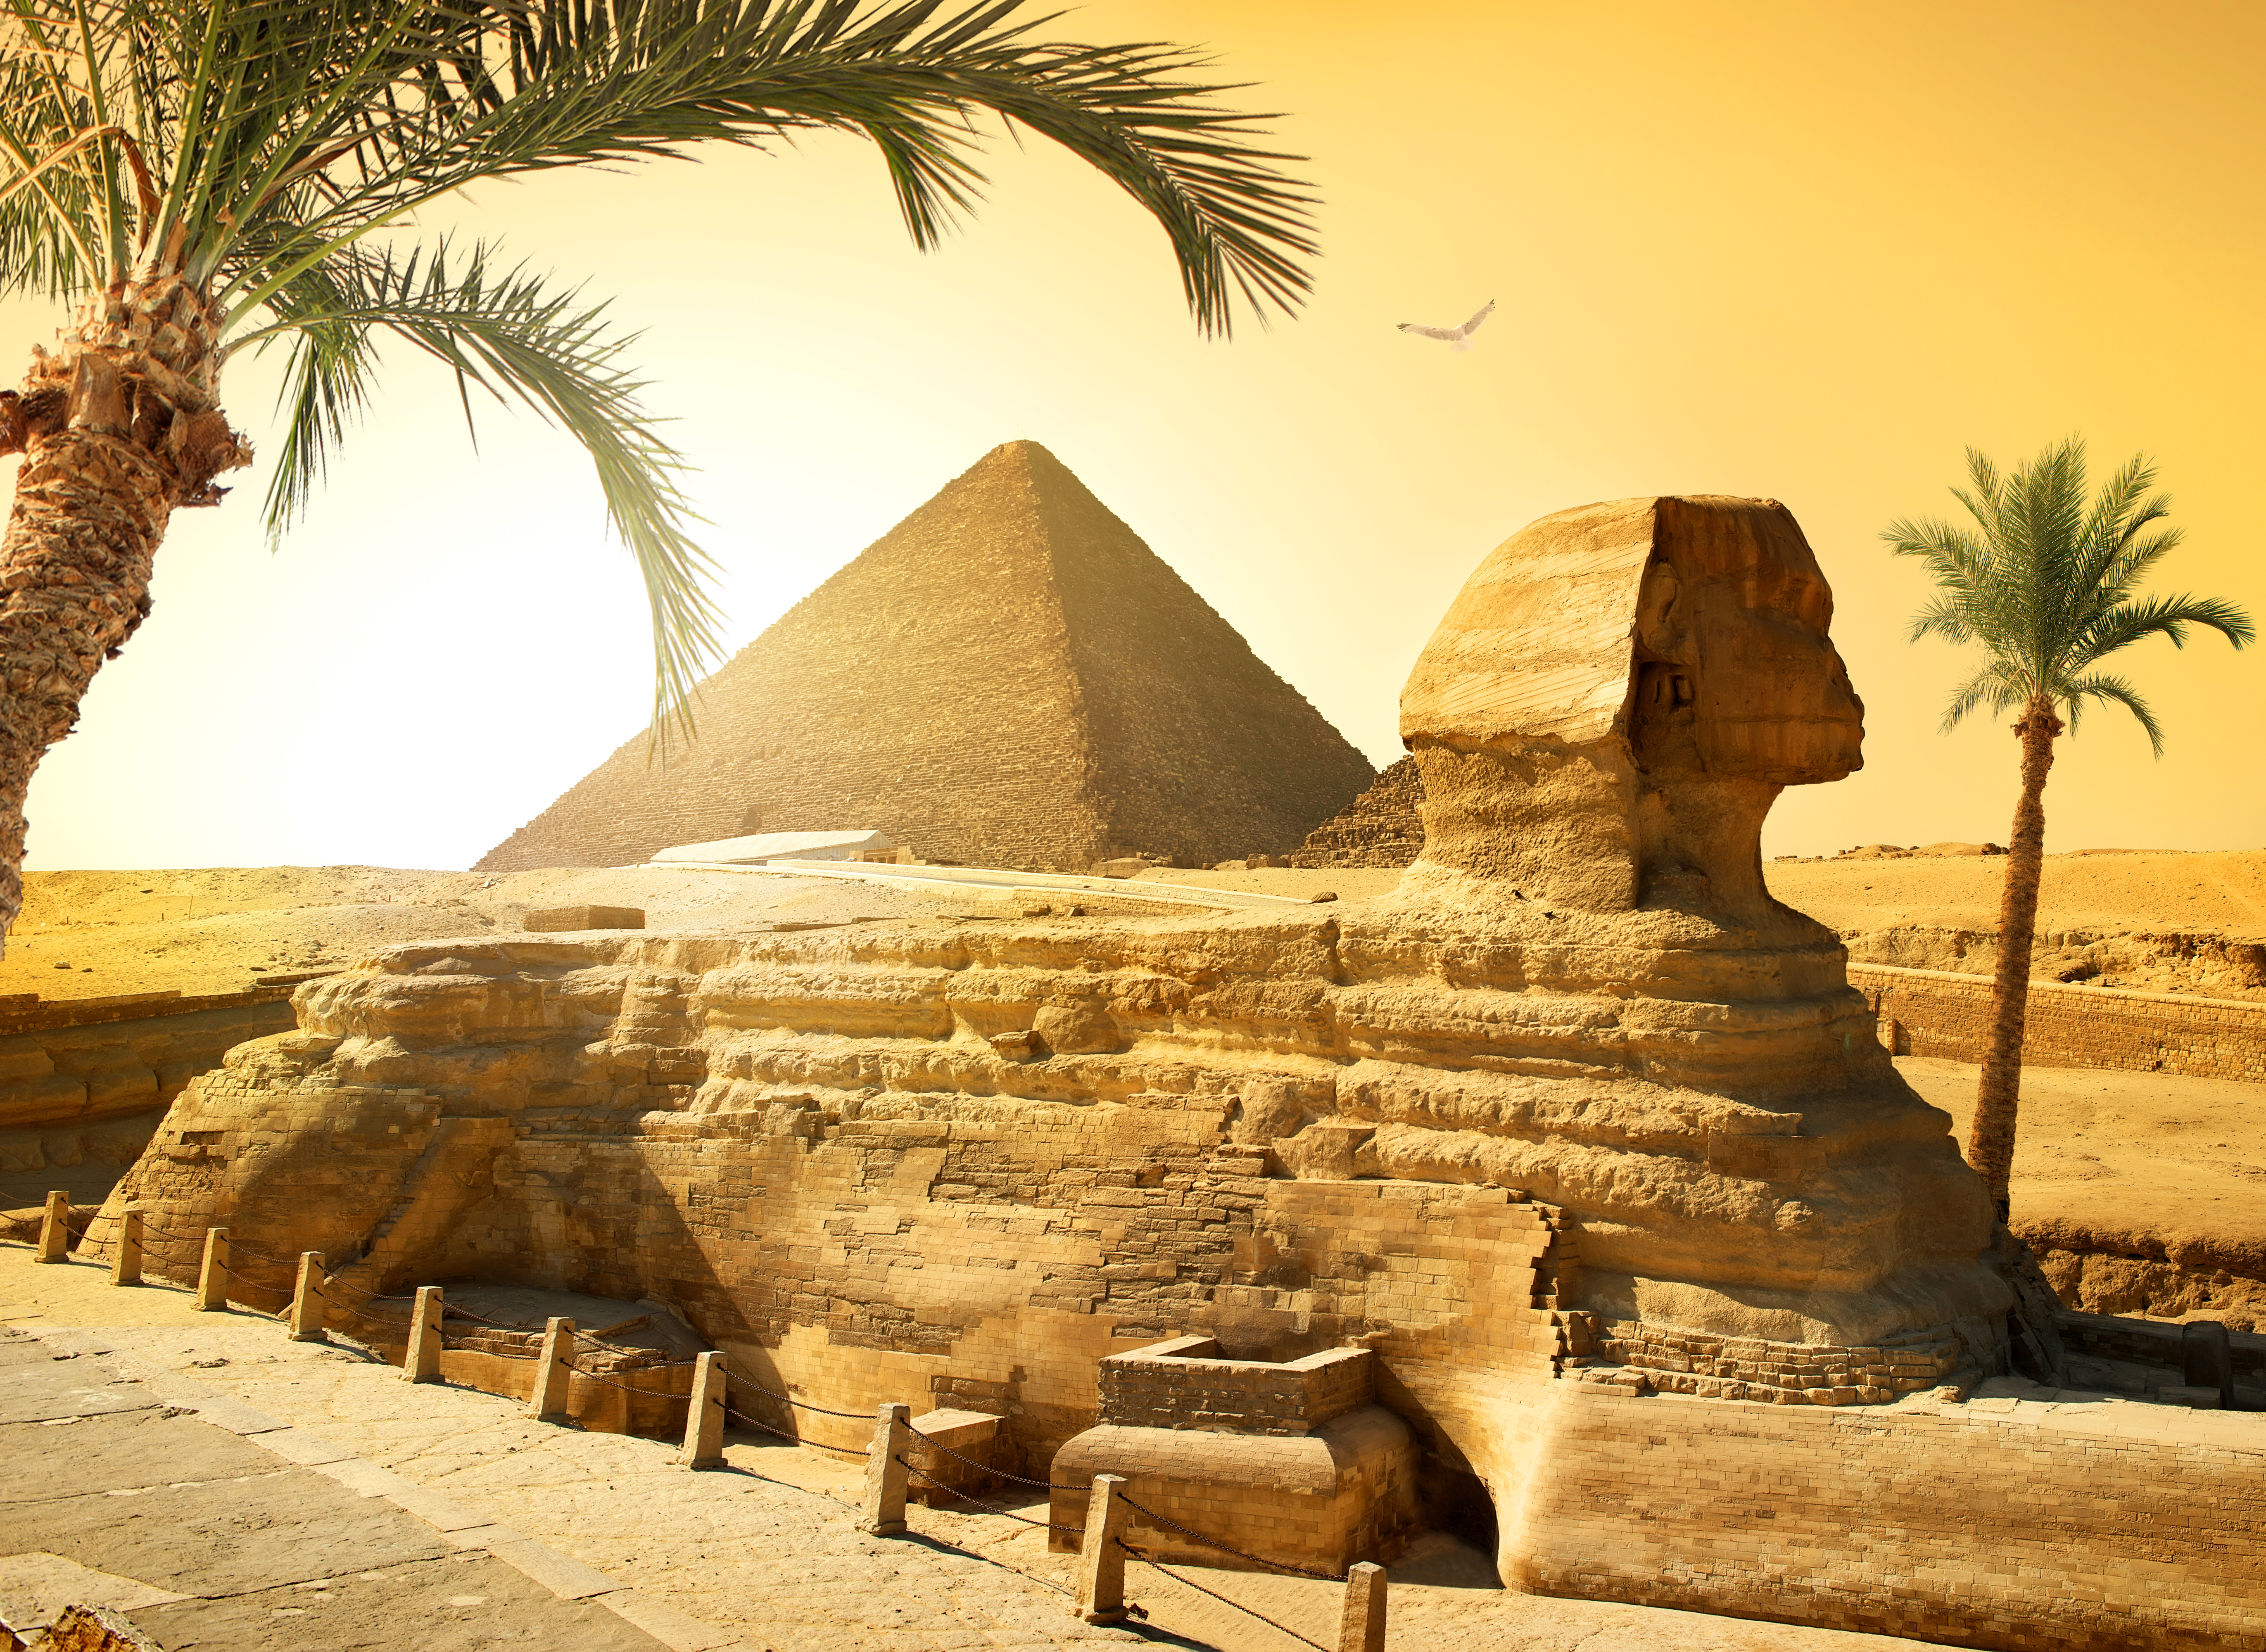 man made, pyramid, egyptian, sphinx